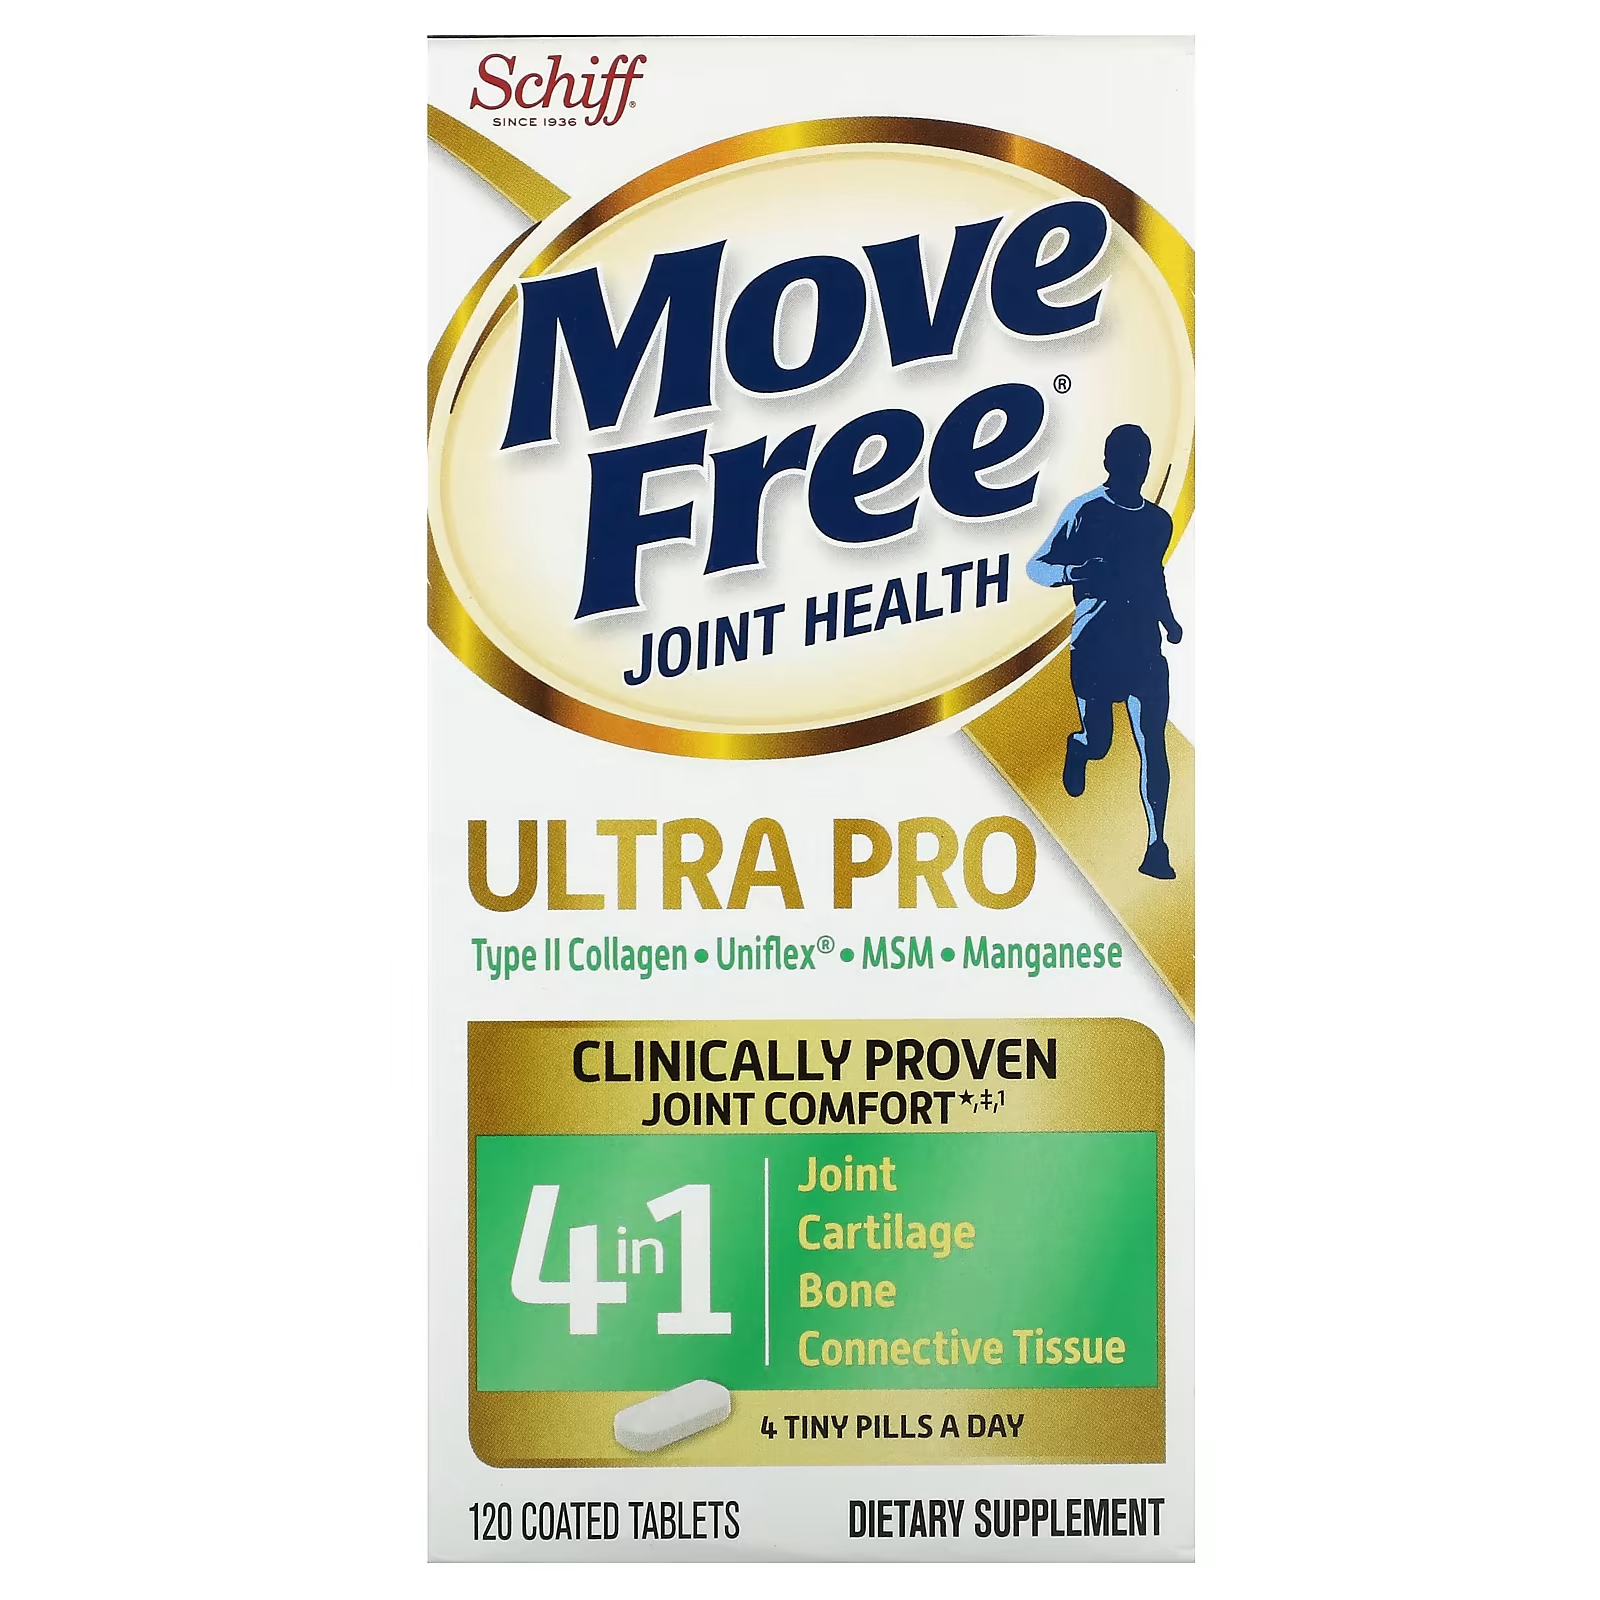 Пищевая добавка Schiff Move Free Joint Health Ultra Pro 2sn joint health 375g малина